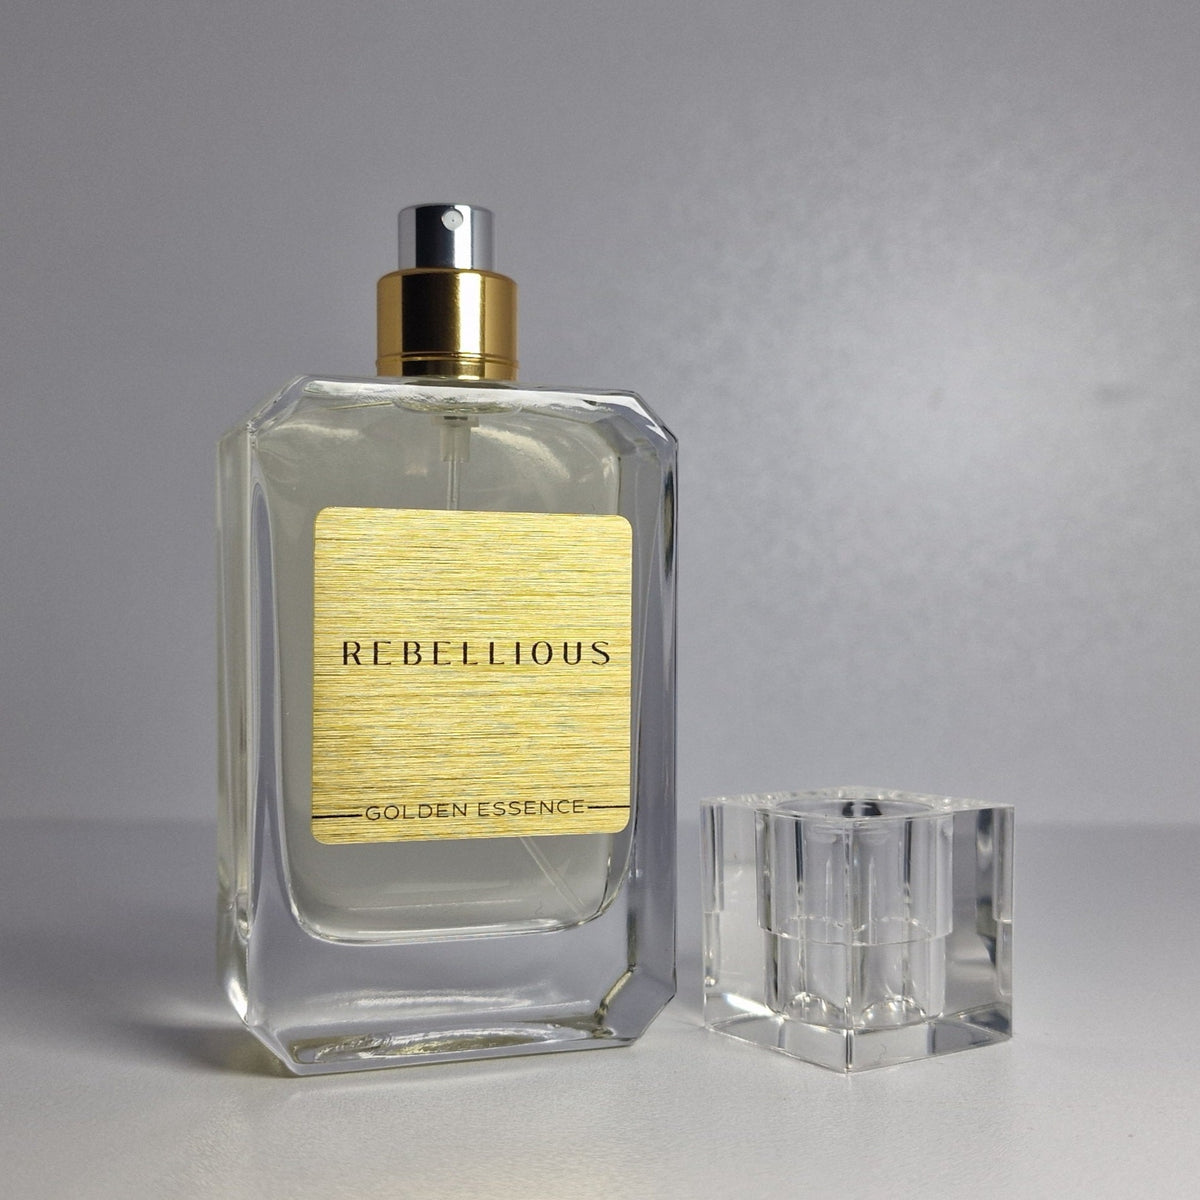 Rebellious Inspired Perfume